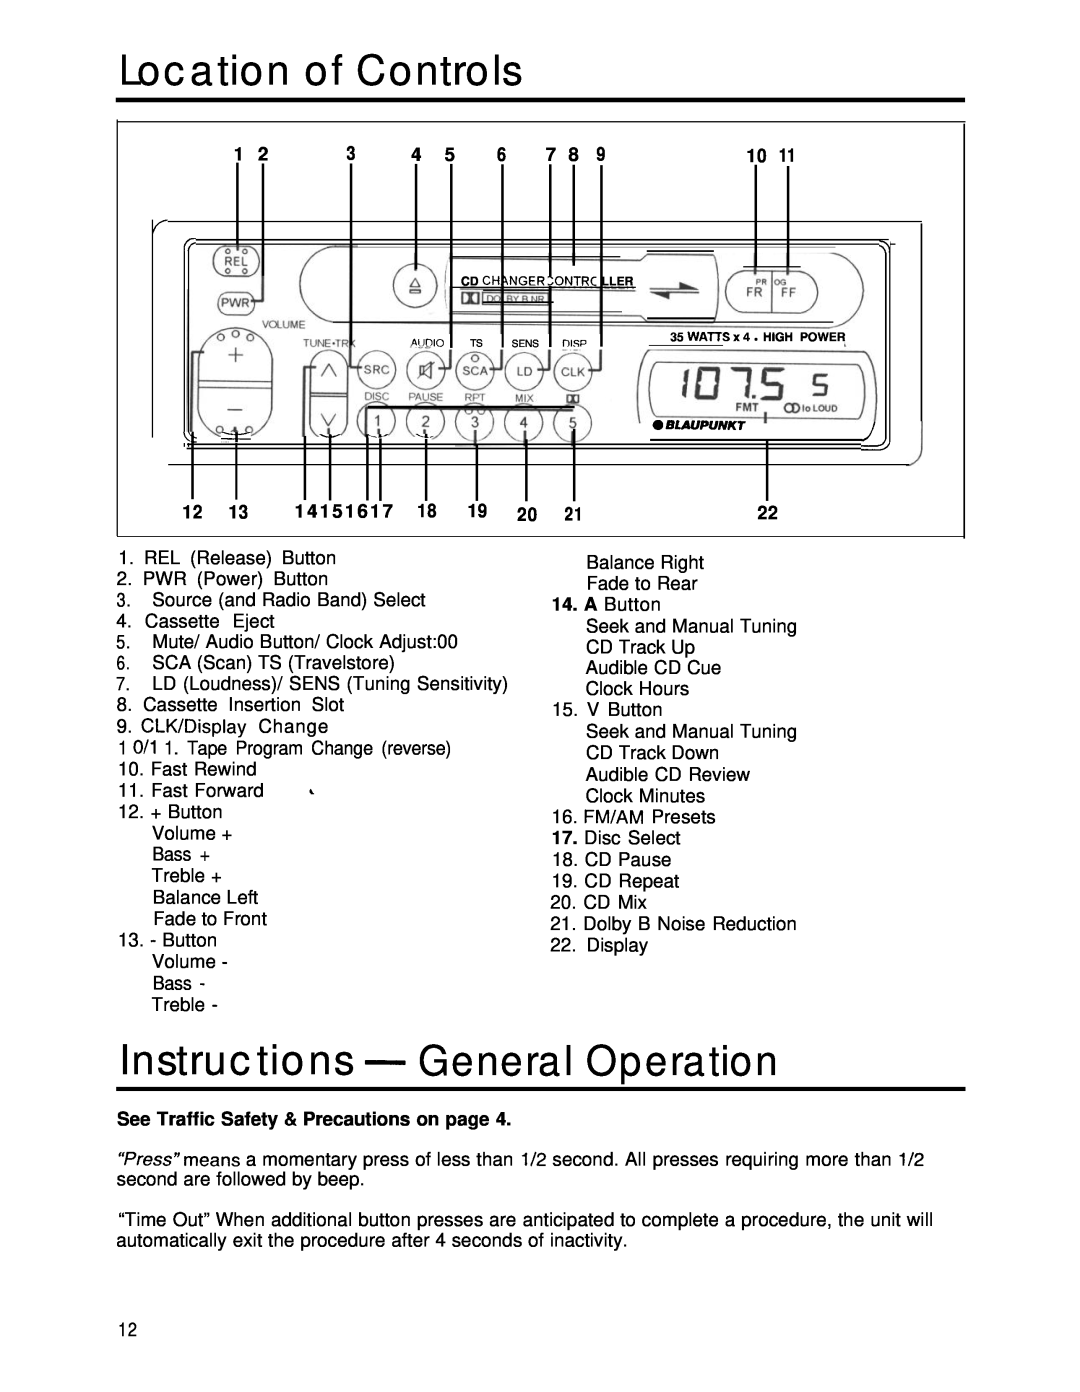 Blaupunkt CR67 manual Location of Controls, Instructions - General Operation 